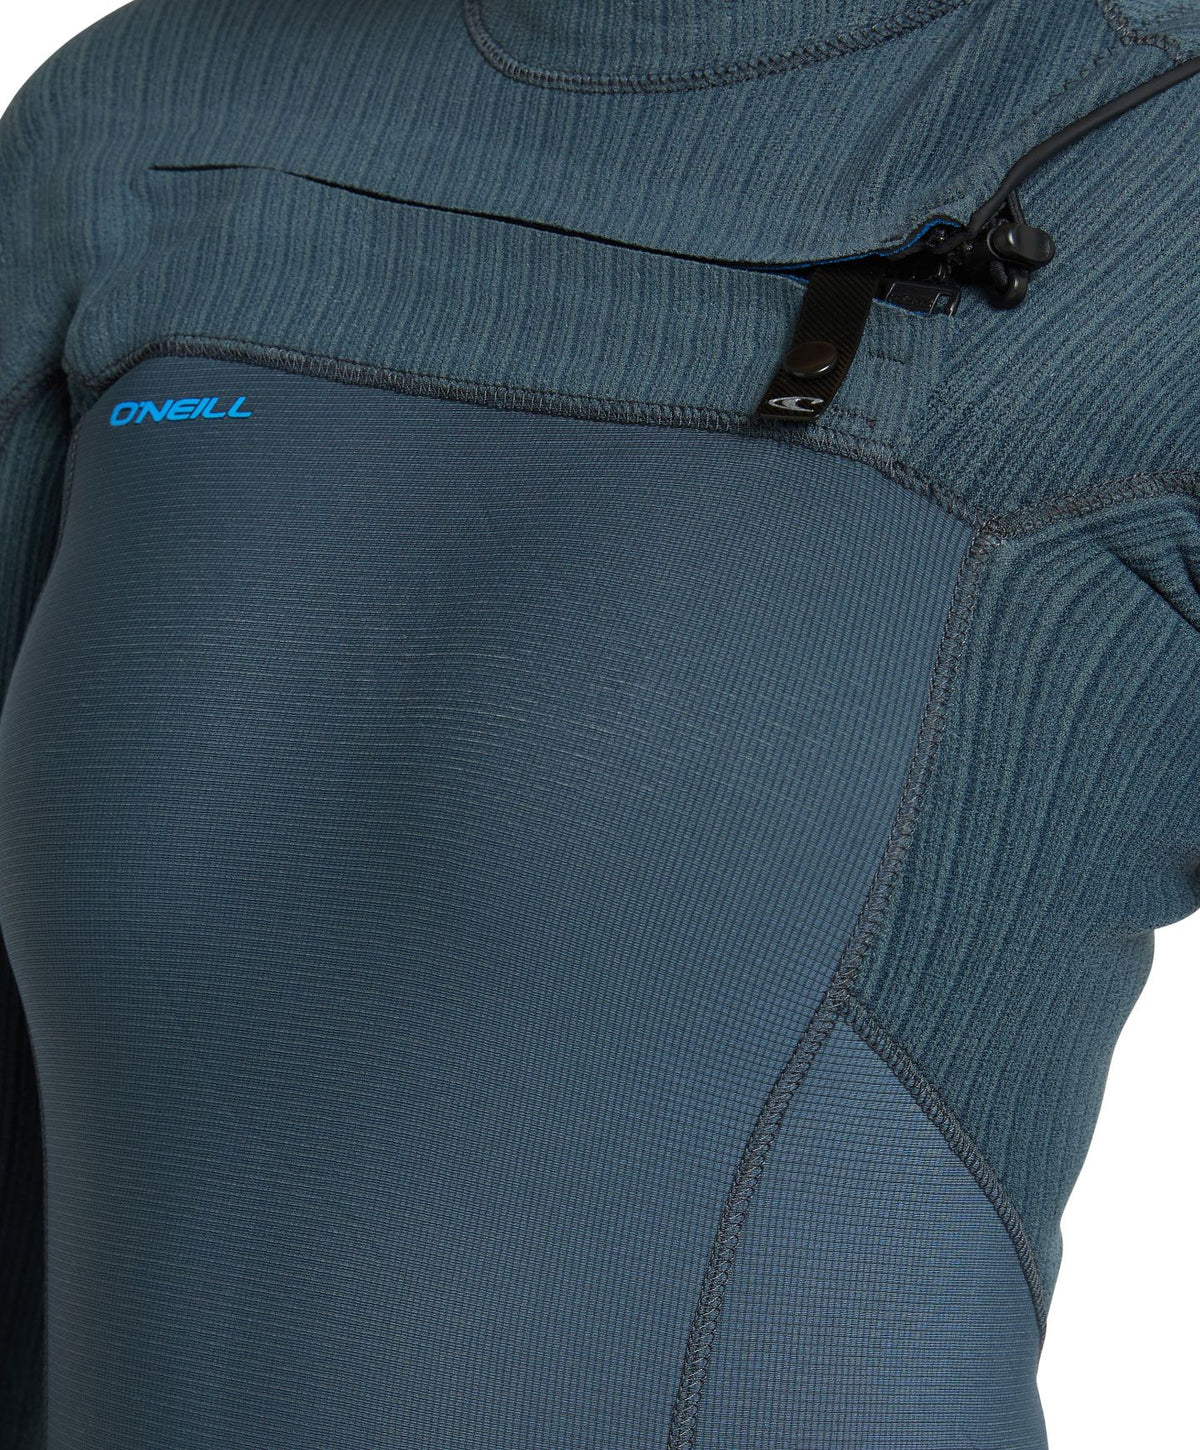 Women's Hyperfreak Long Sleeve Spring Suit 2mm Wetsuit - Shade